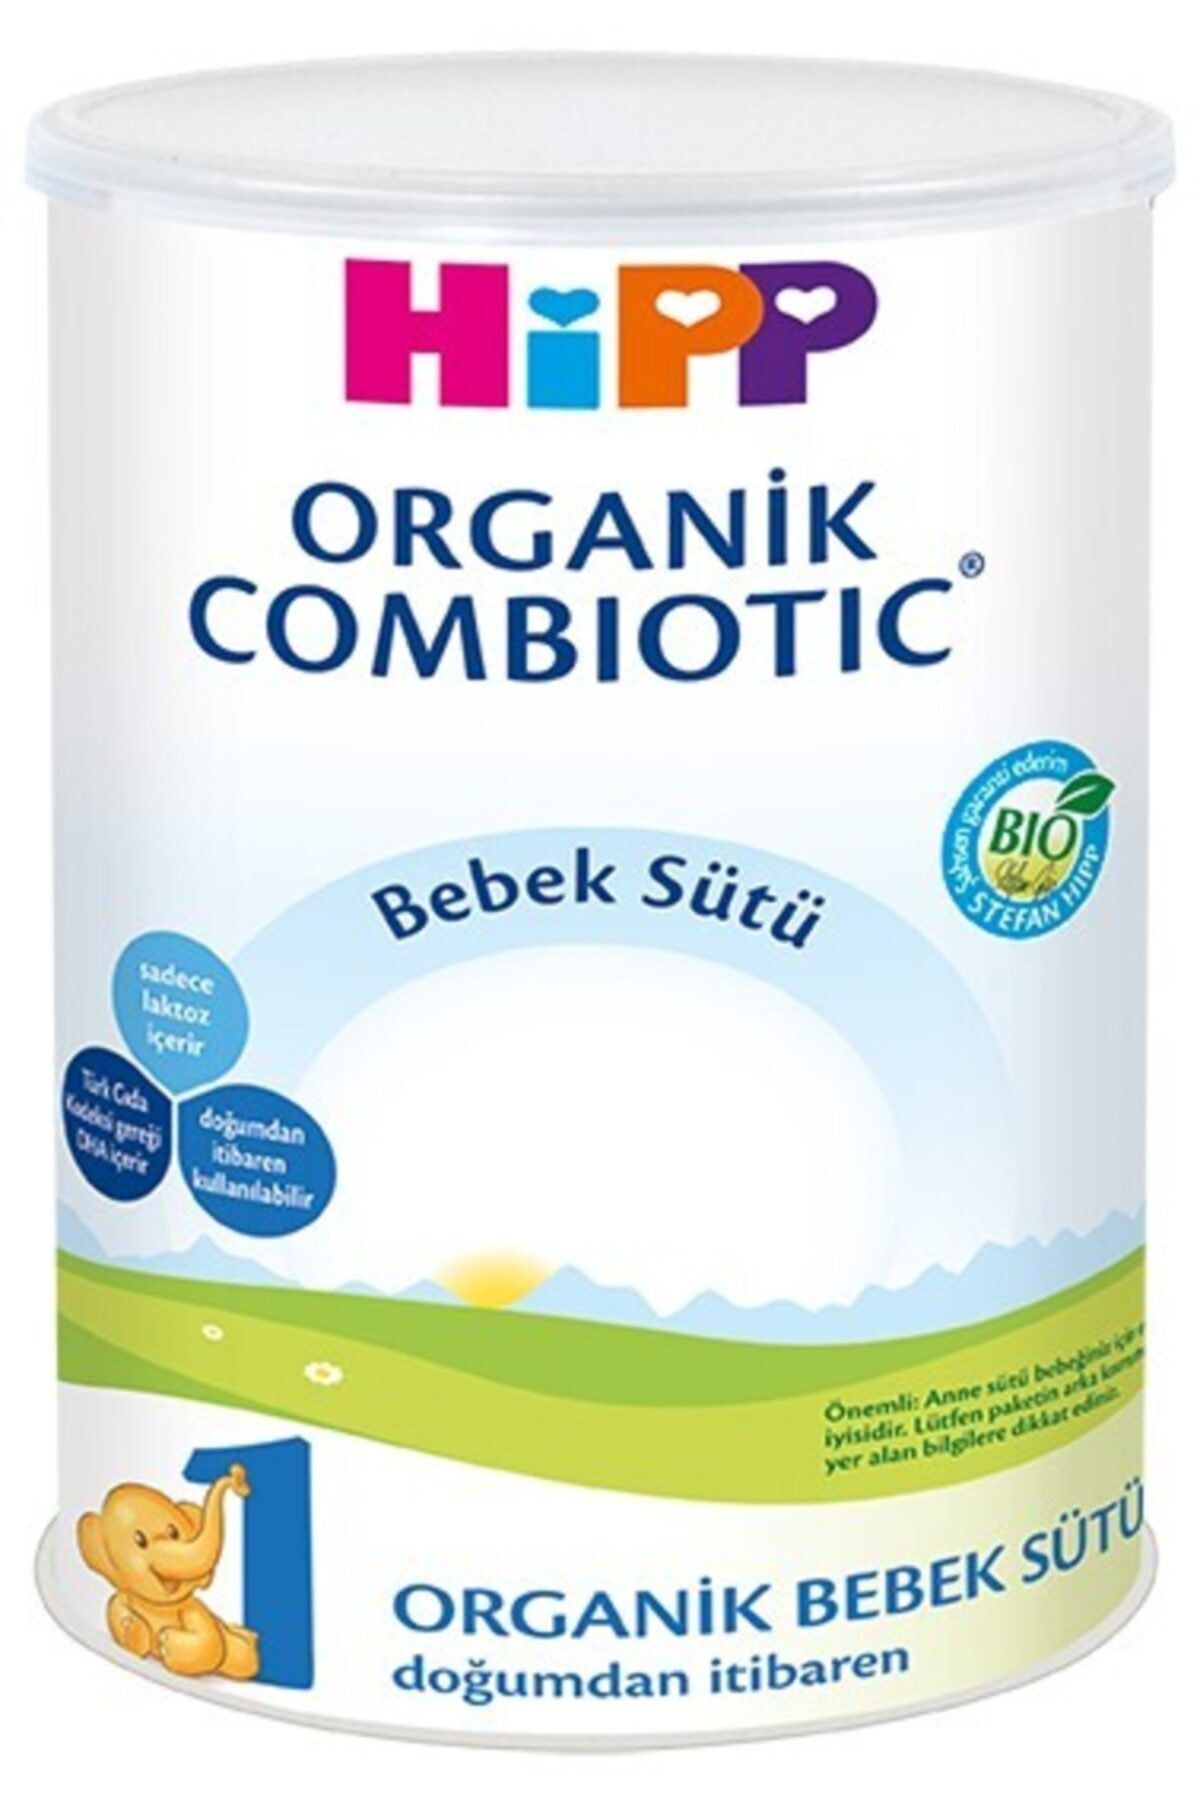 Hipp 1 Organik Combiotic Bebek Sütü 350 gr